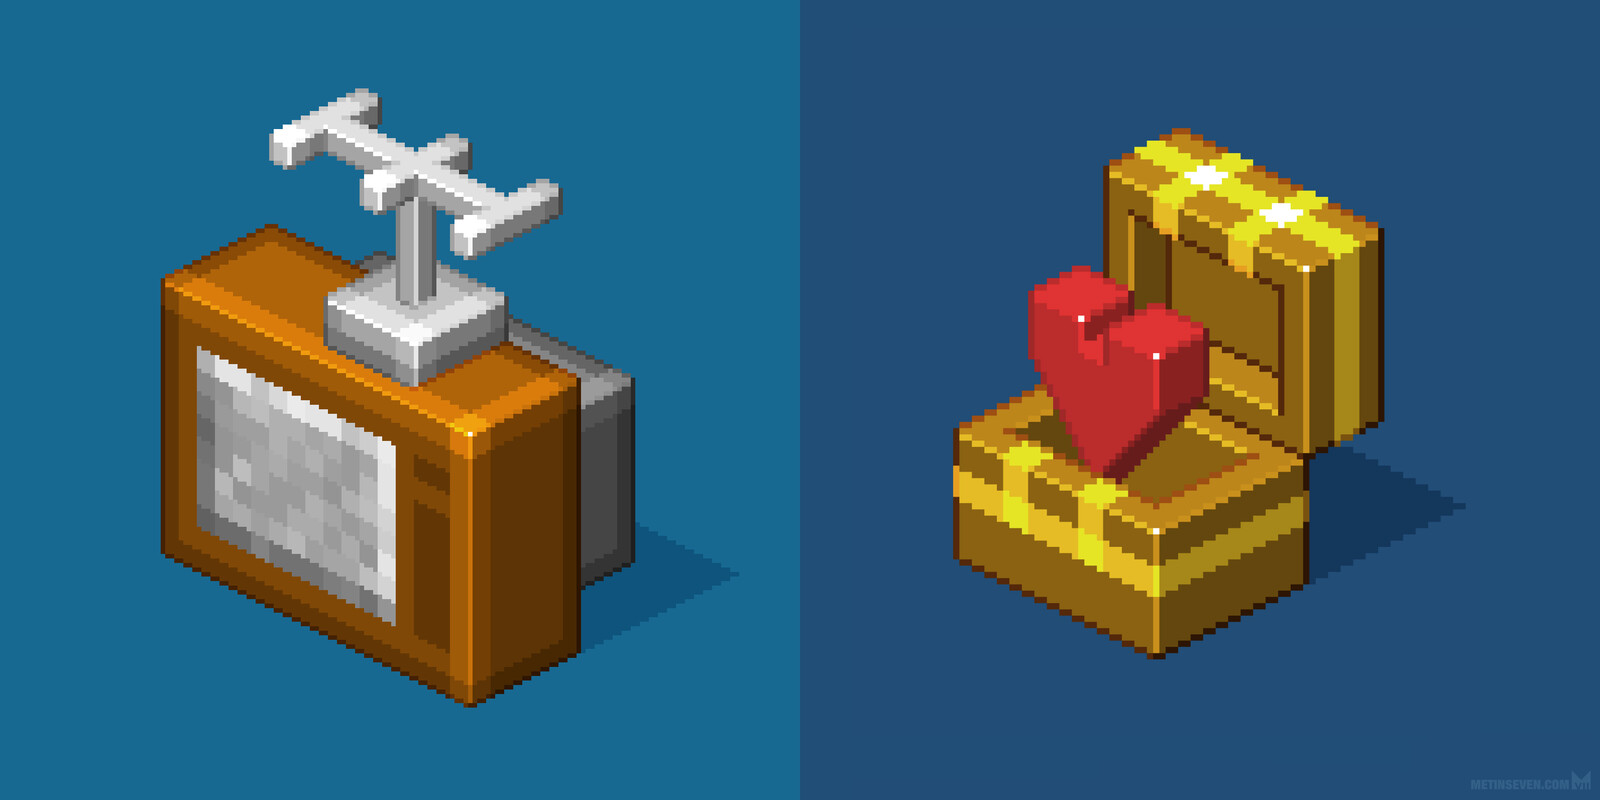 Game-style isometric pixel art icons